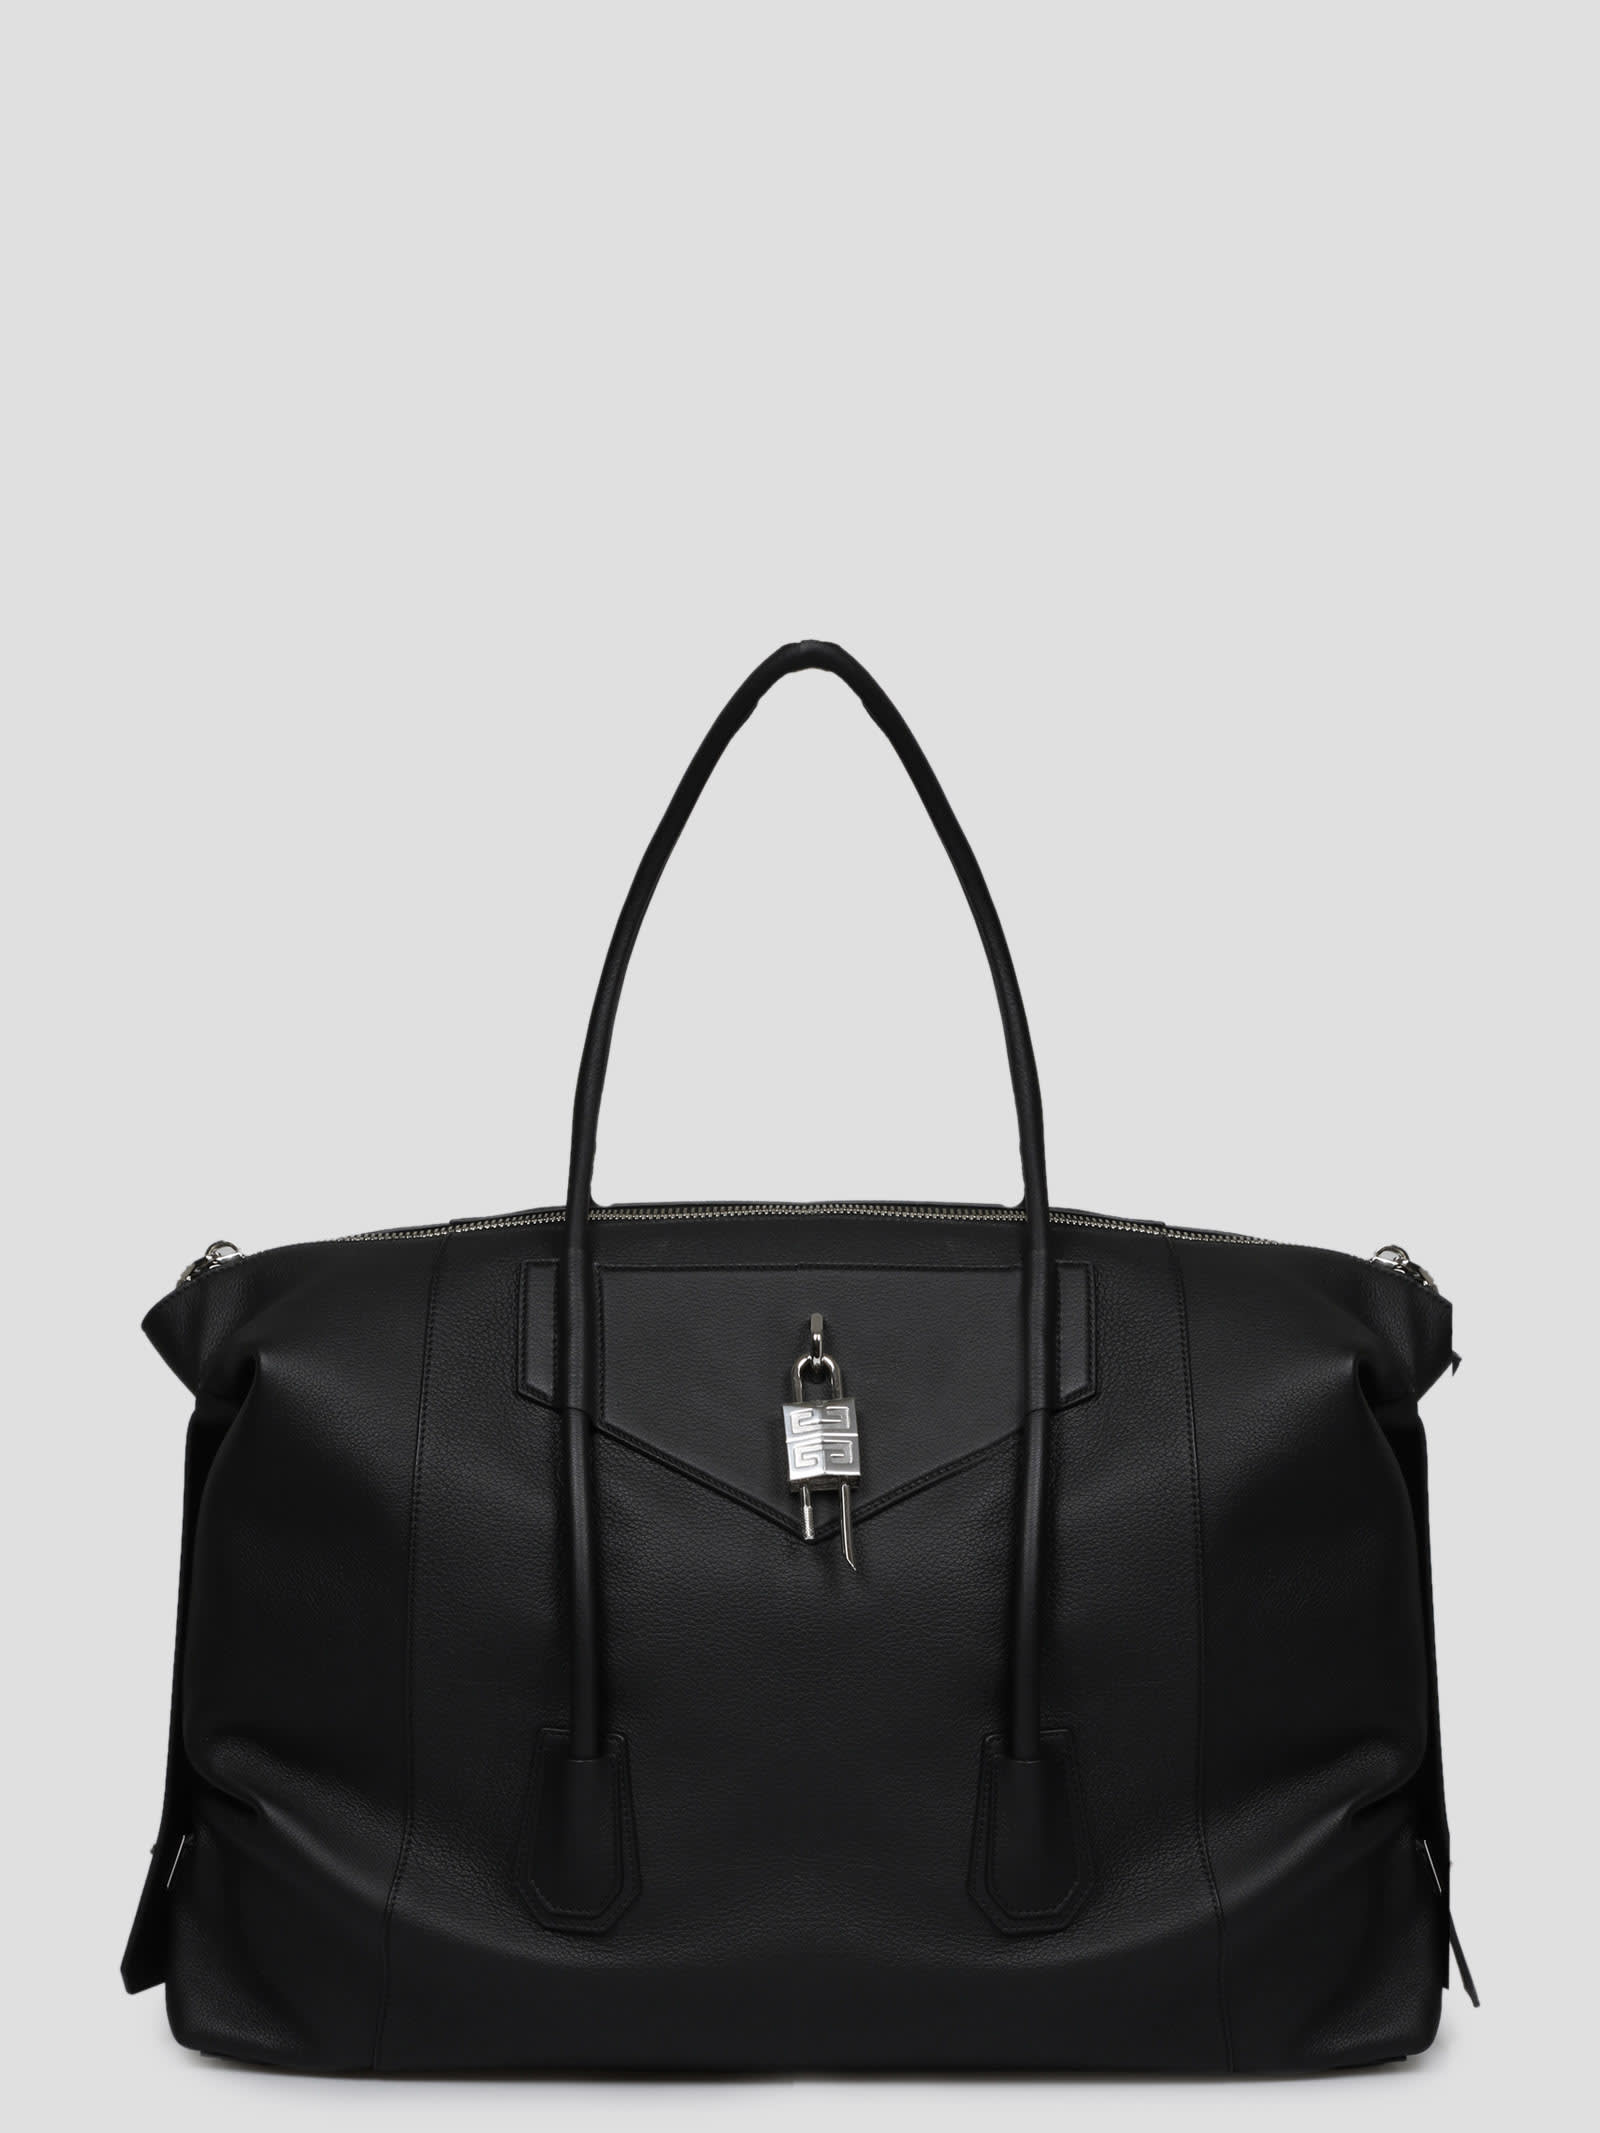 Givenchy Antigona Lock Soft Large Bag